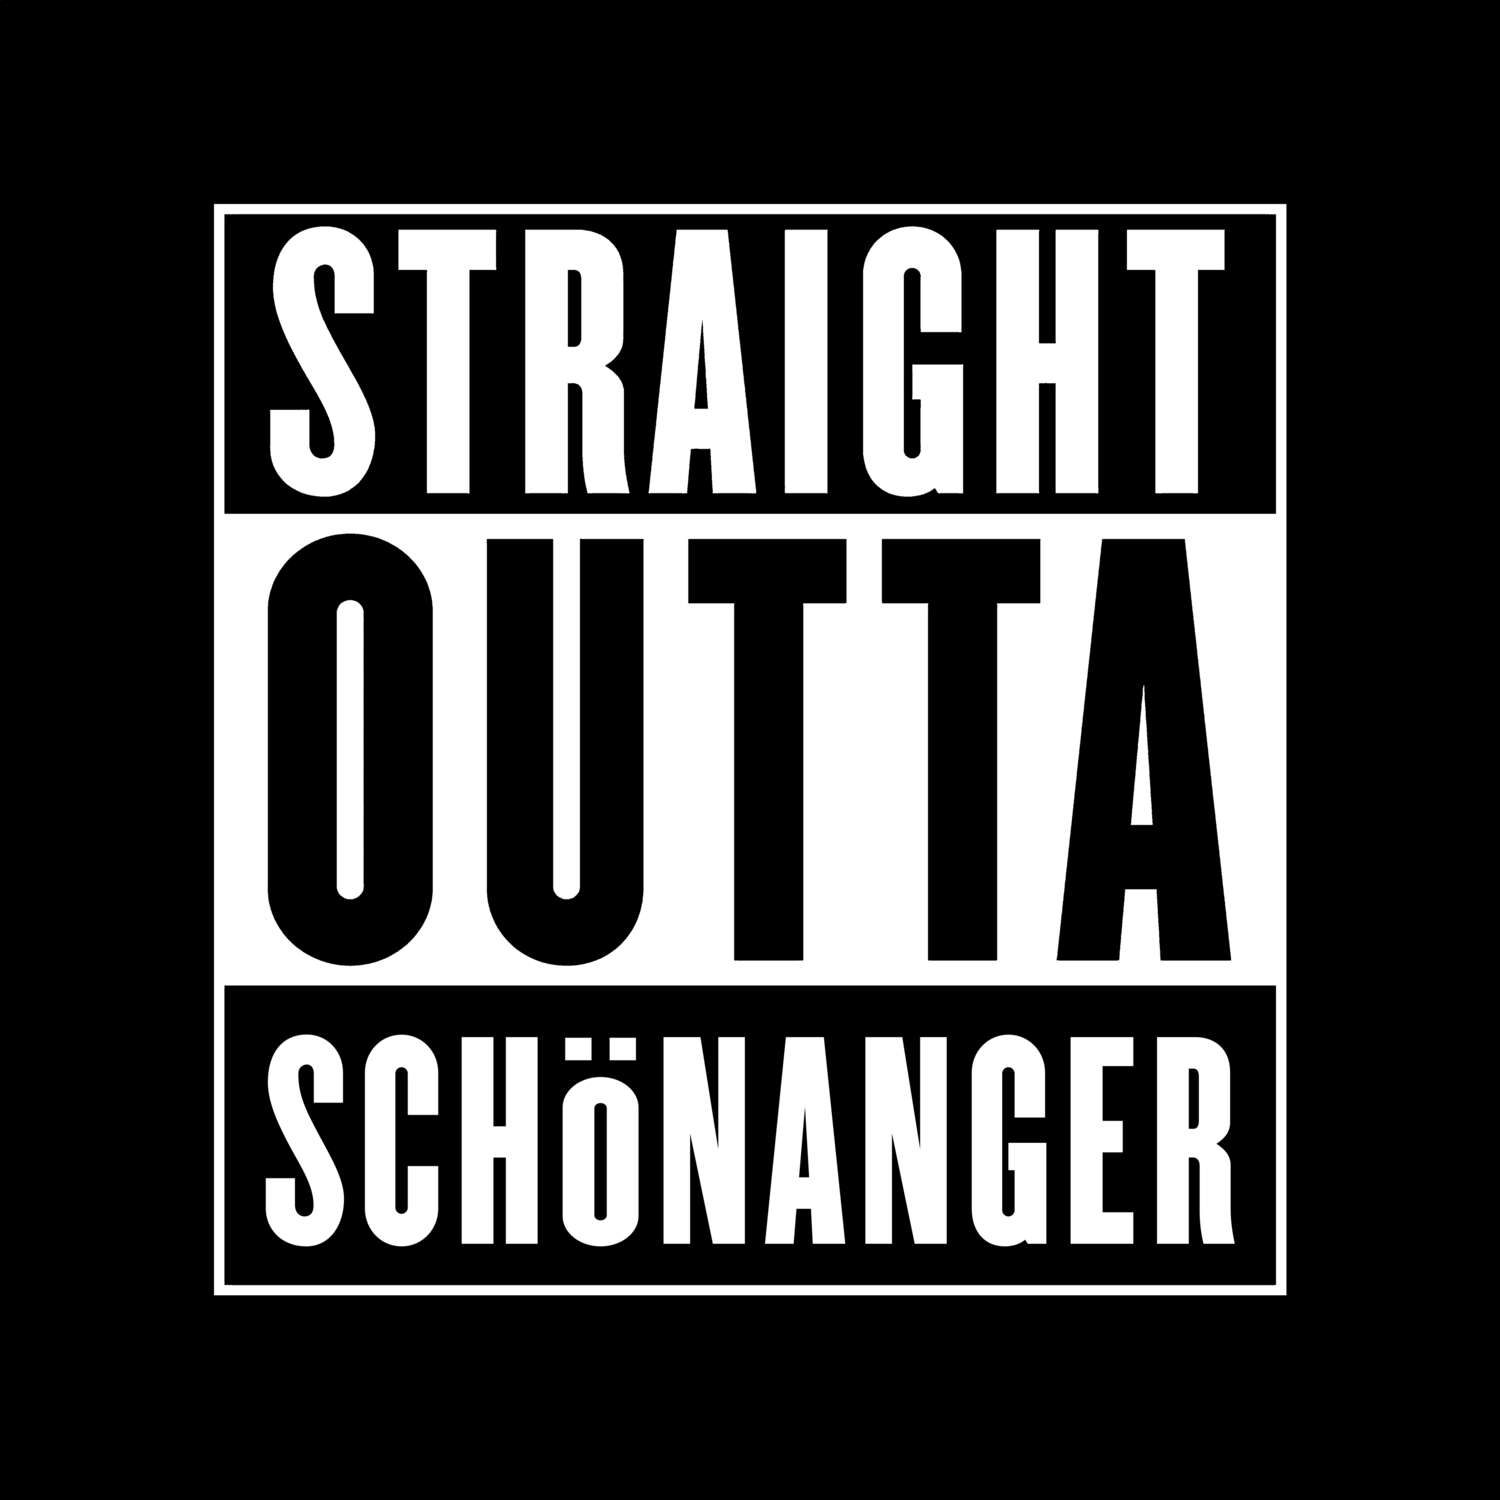 Schönanger T-Shirt »Straight Outta«